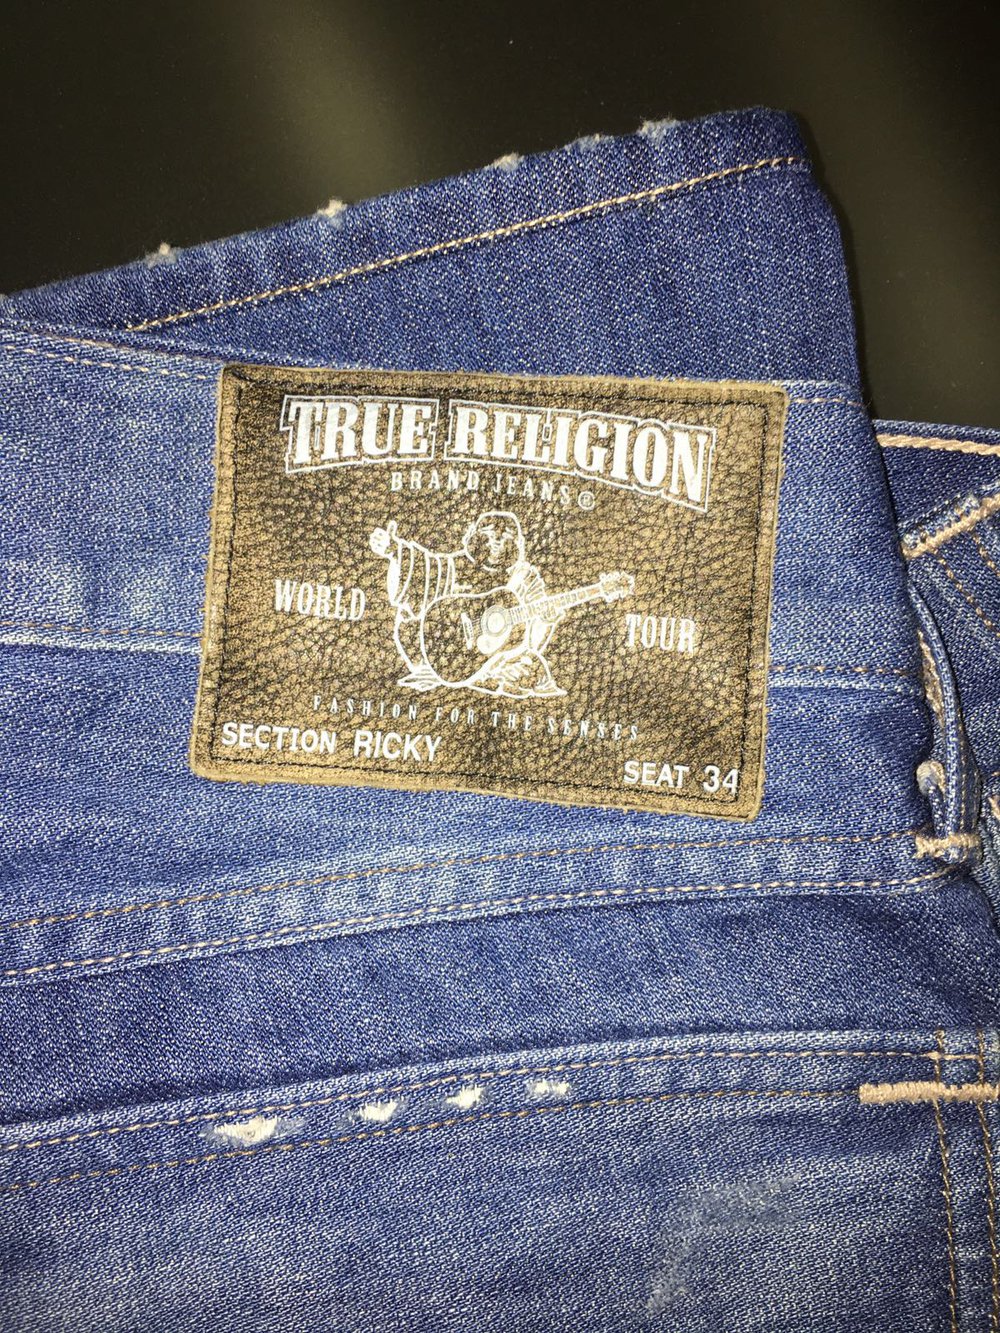 Originale Super Bobby T True Religion Jeans